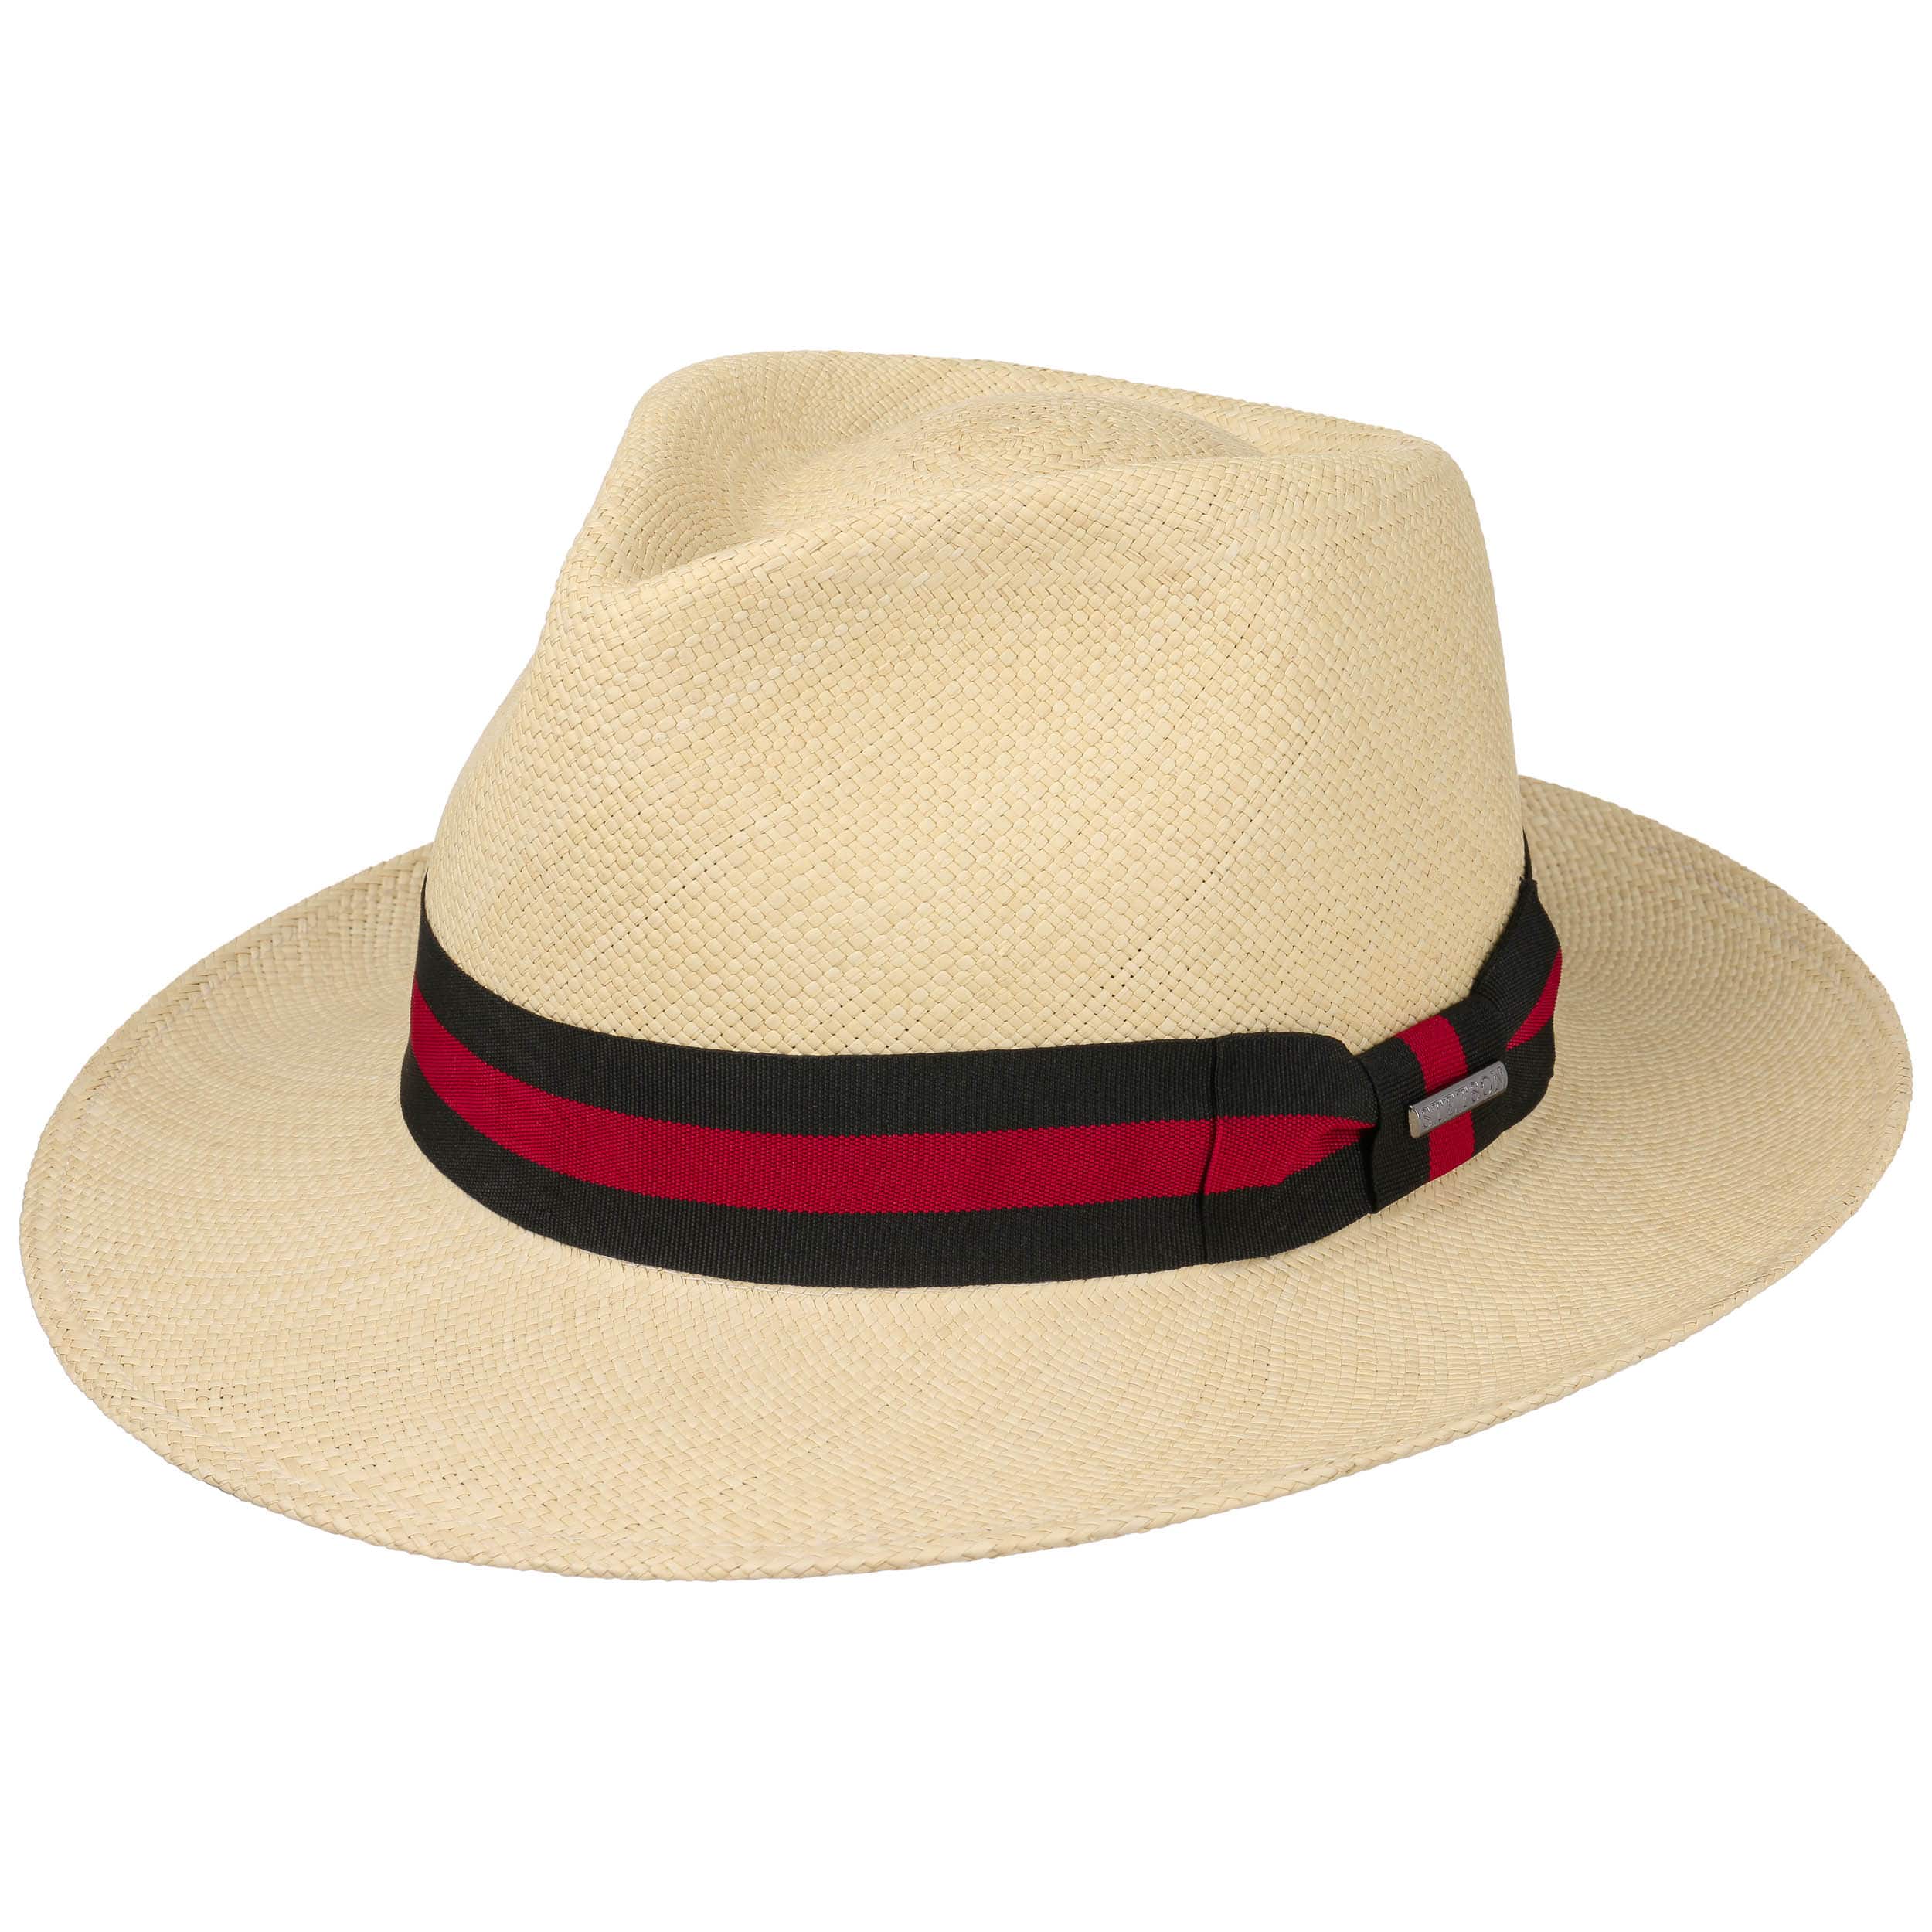 Pioner Illustrer Akademi Rocaro Fedora Panama Hat by Stetson - 159,00 €